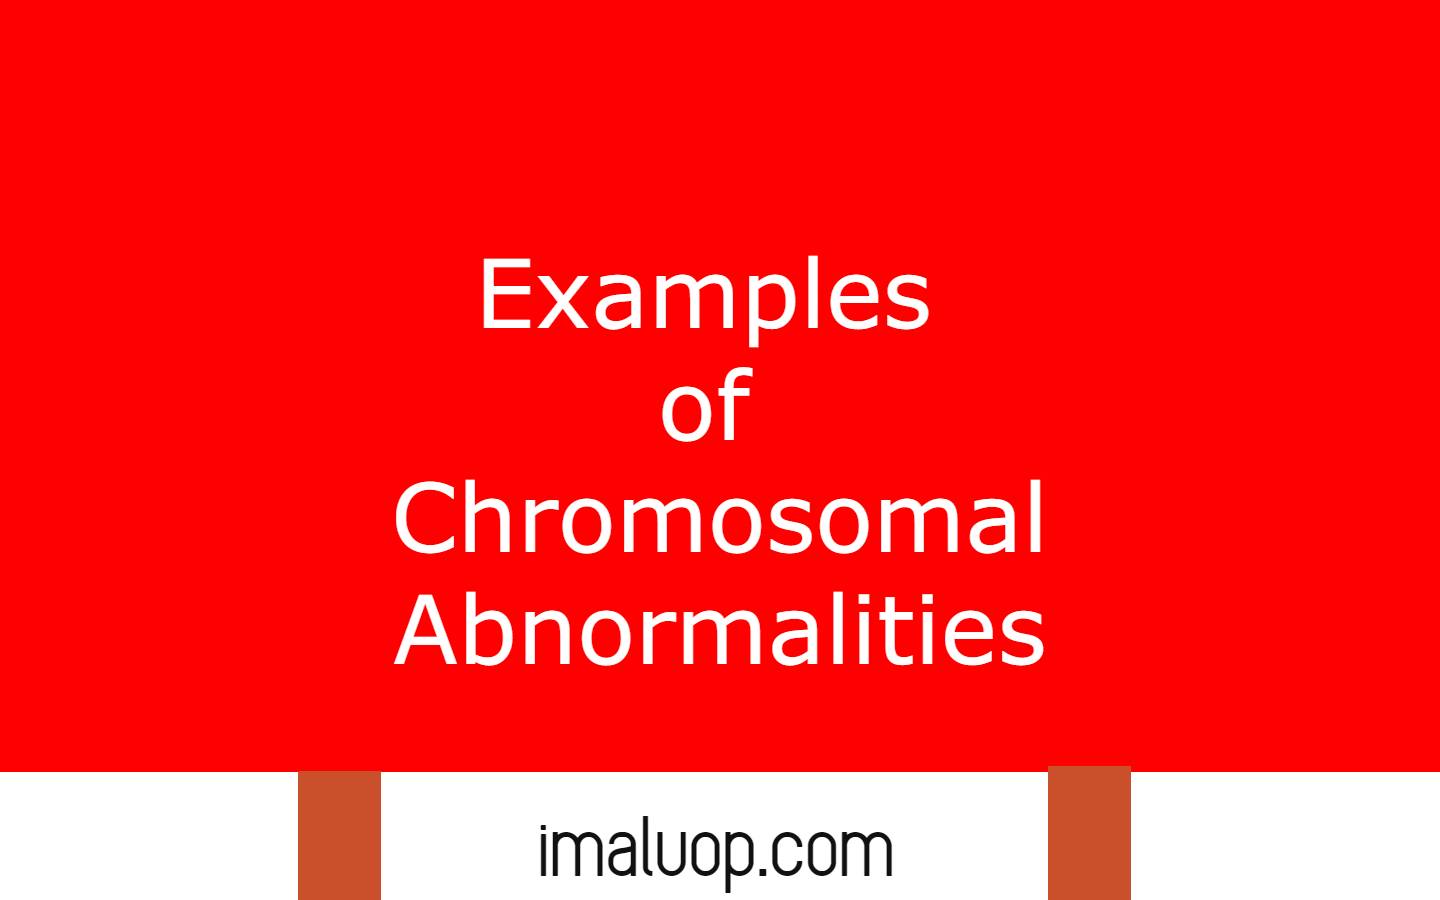 Examples of Chromosomal Abnormalities